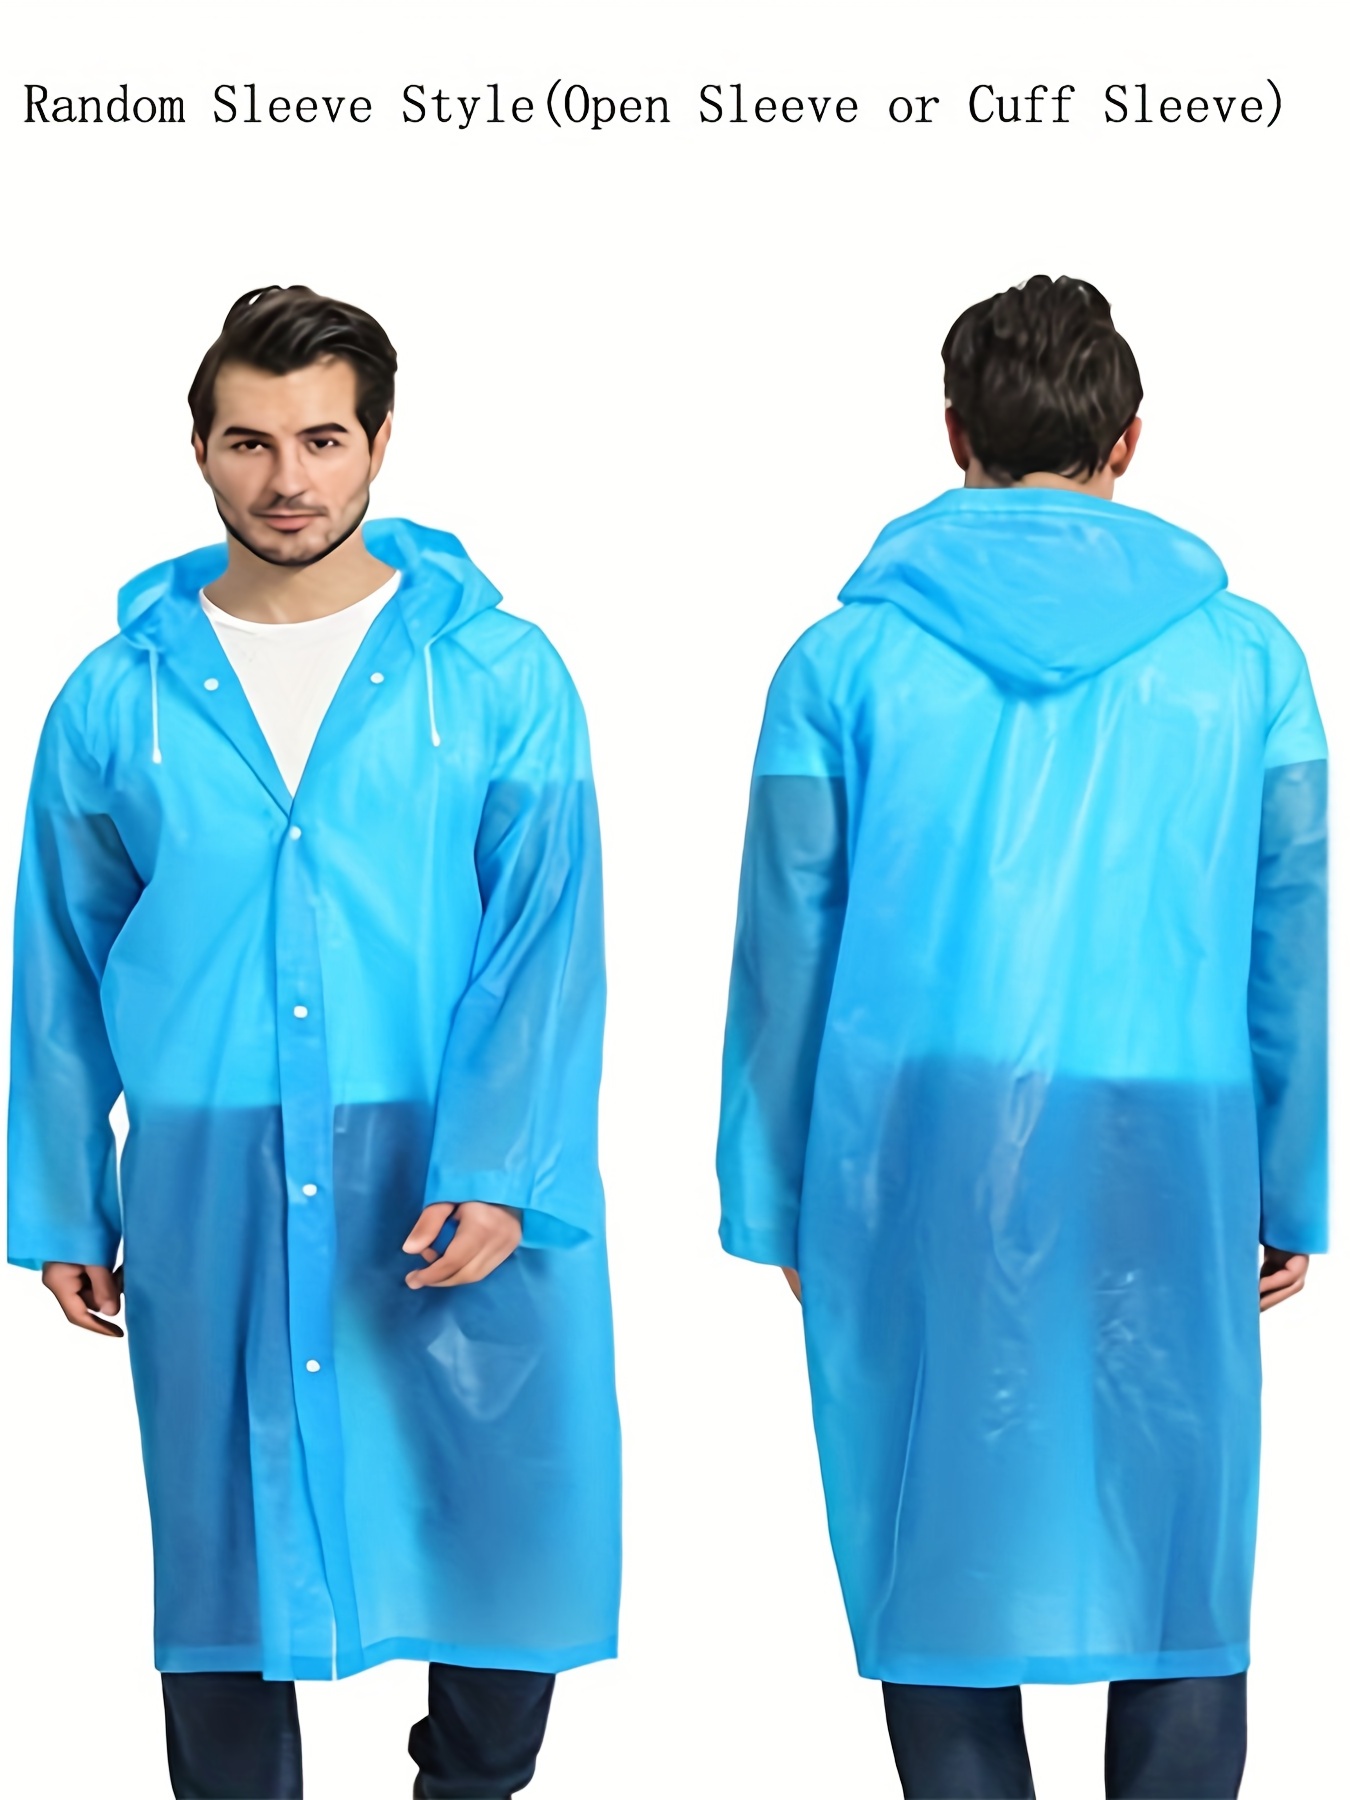 Capa de lluvia de moda Impermeable al aire libre Mujeres Hombres Chubasquero  Poncho largo - Verde XL Yuyangstore impermeables con capucha para mujer